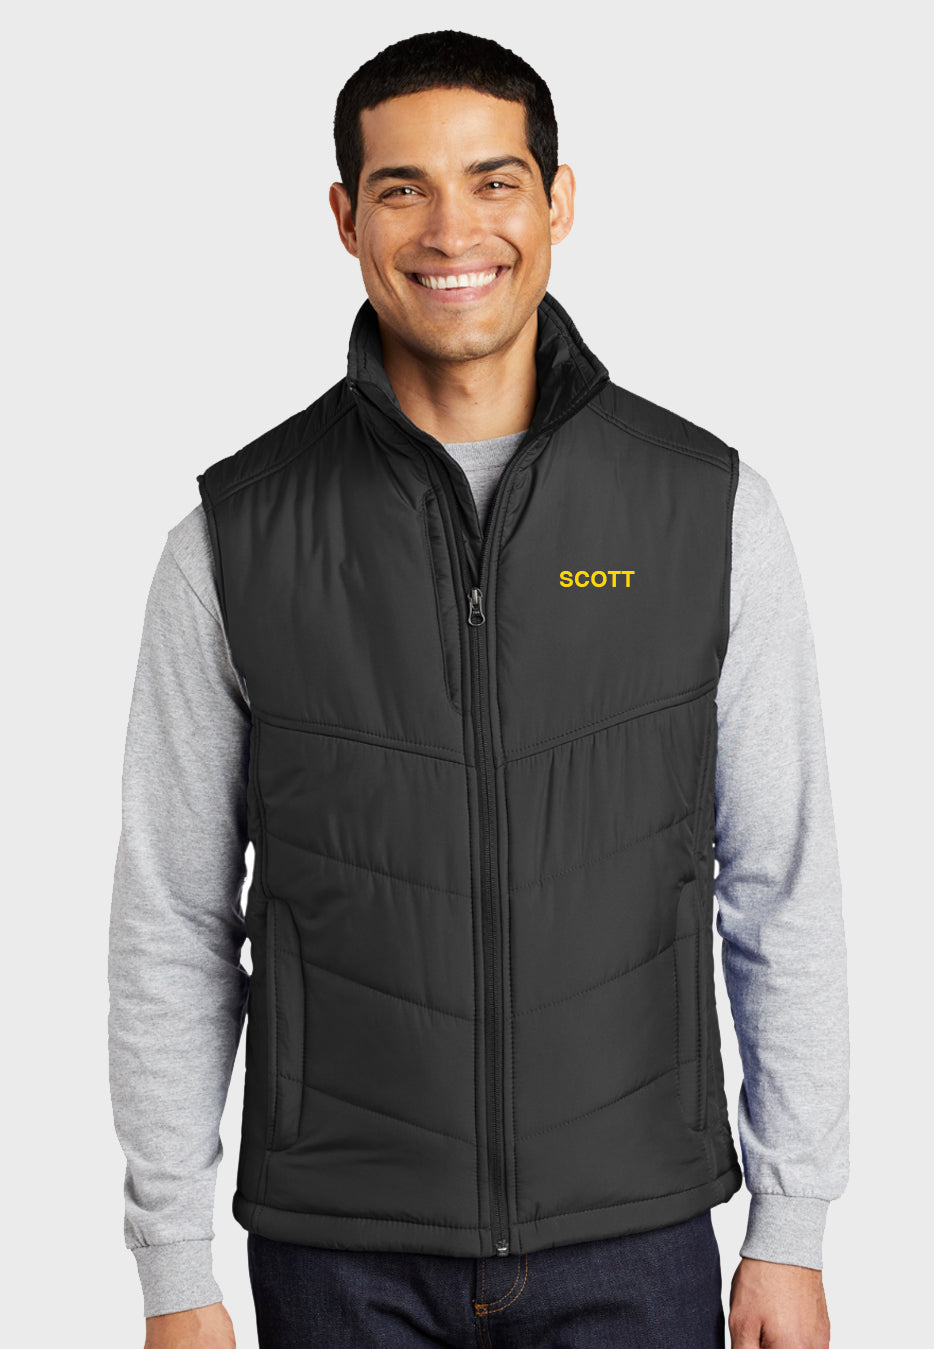 SBK Dressage Port Authority® Mens Puffy Vest - Black